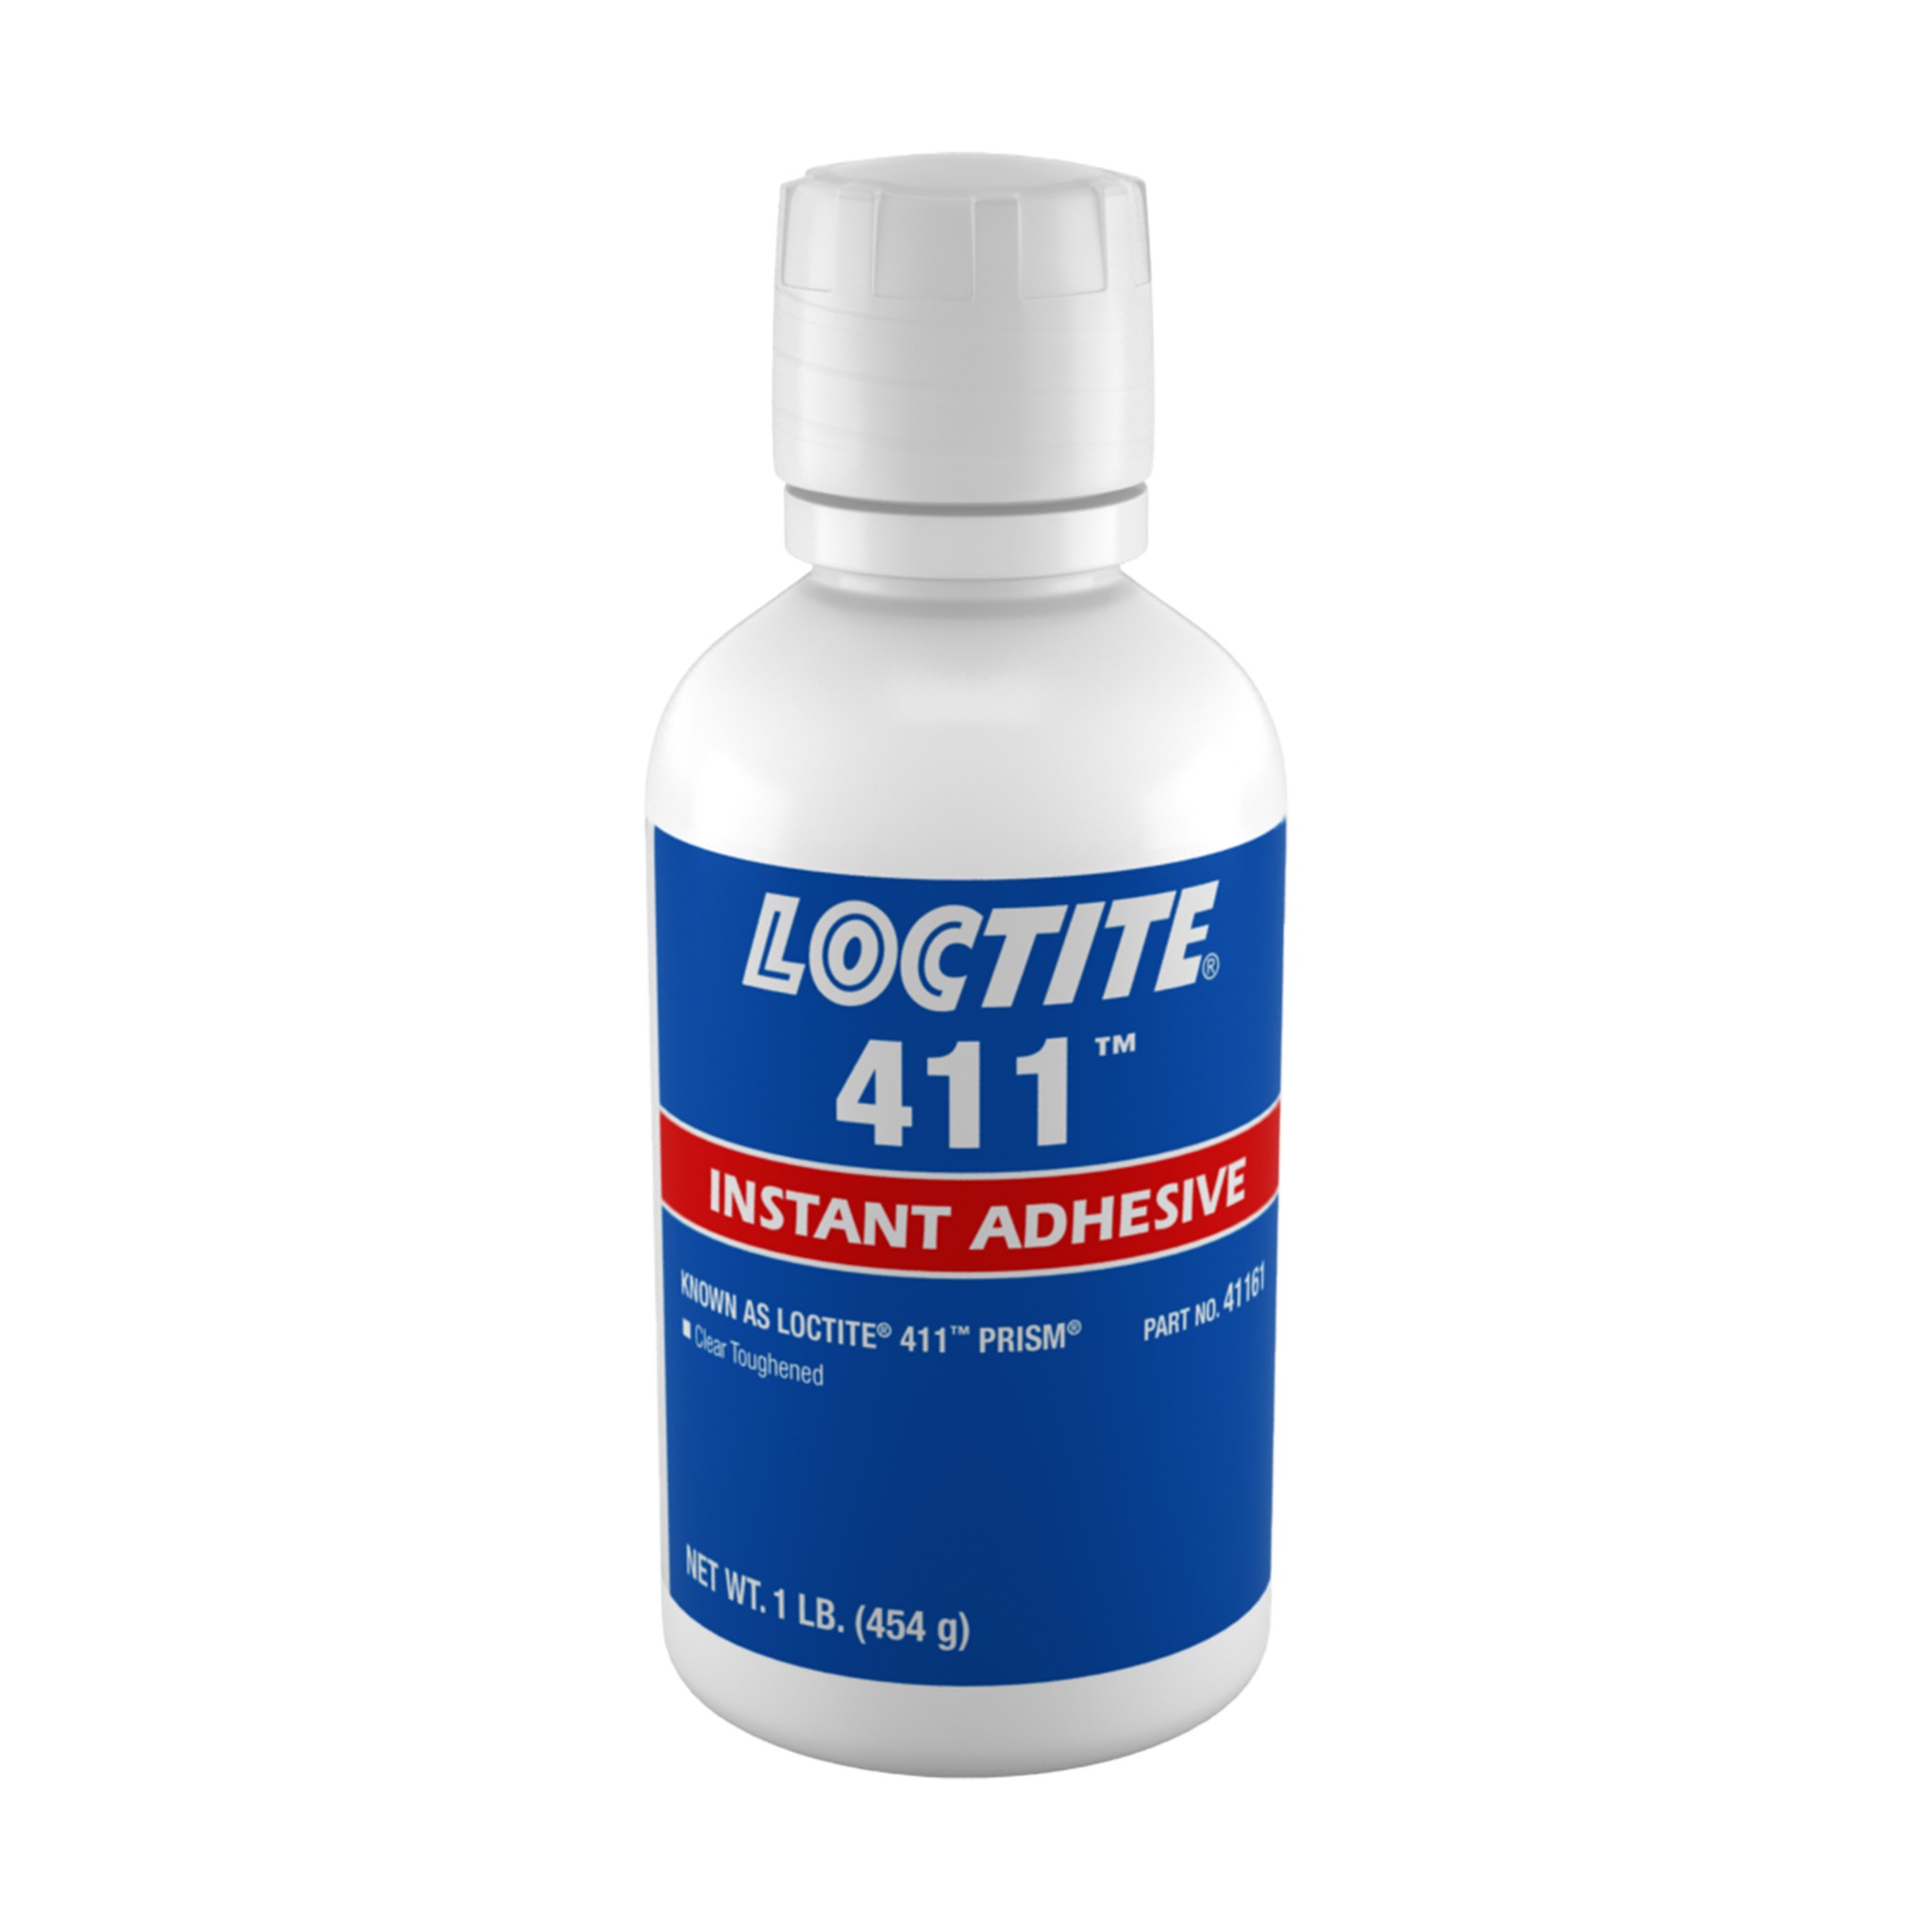 LOCTITE 411 - Instant adhesive - Henkel Adhesives